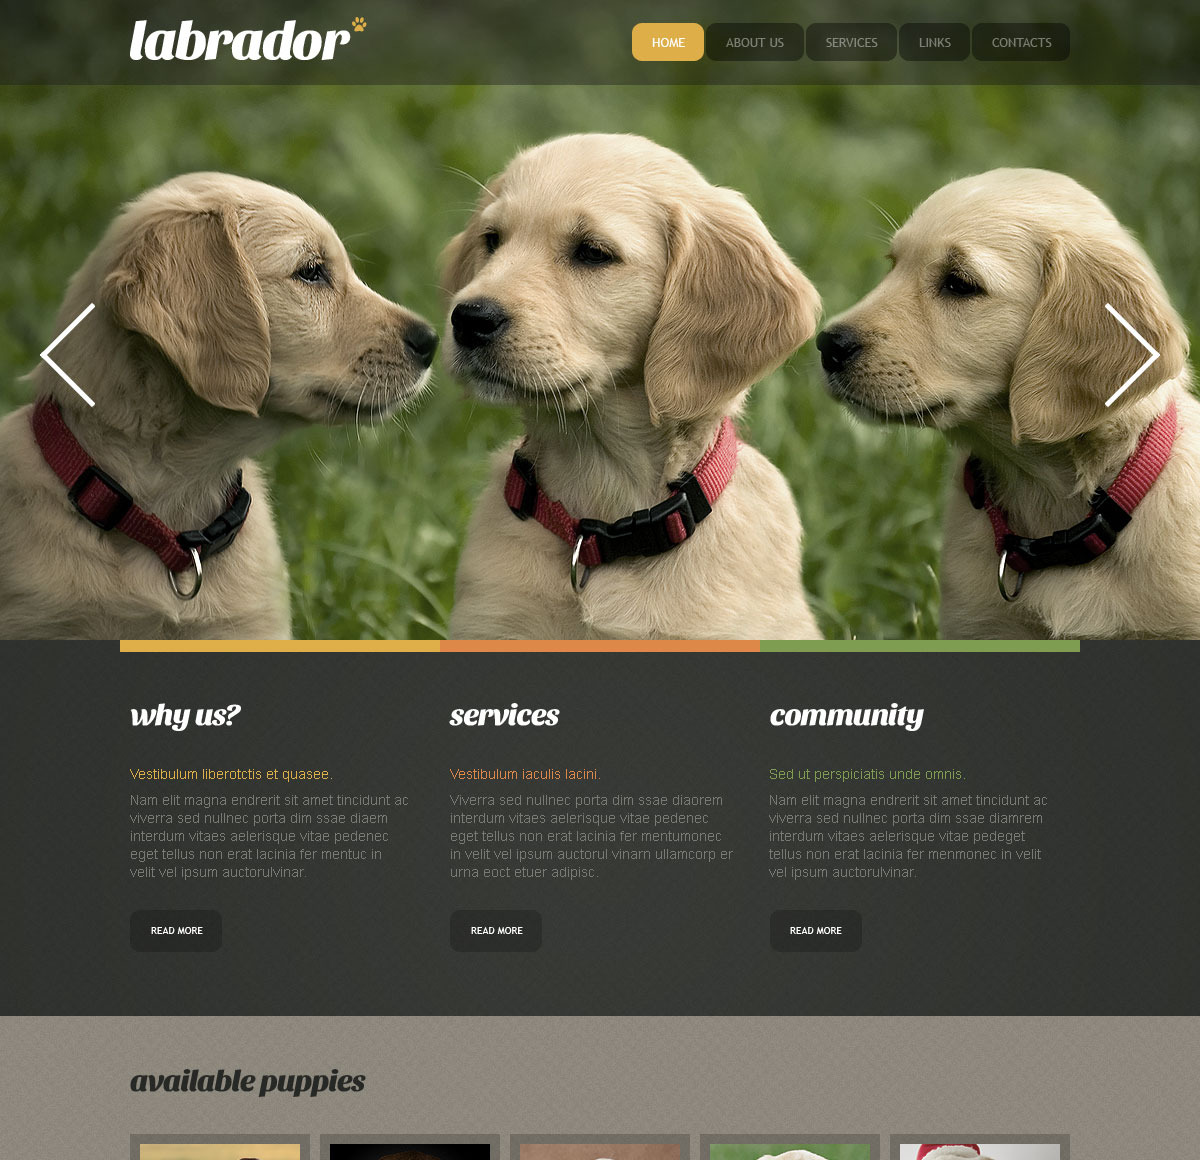 Dog Breeder Website Templates